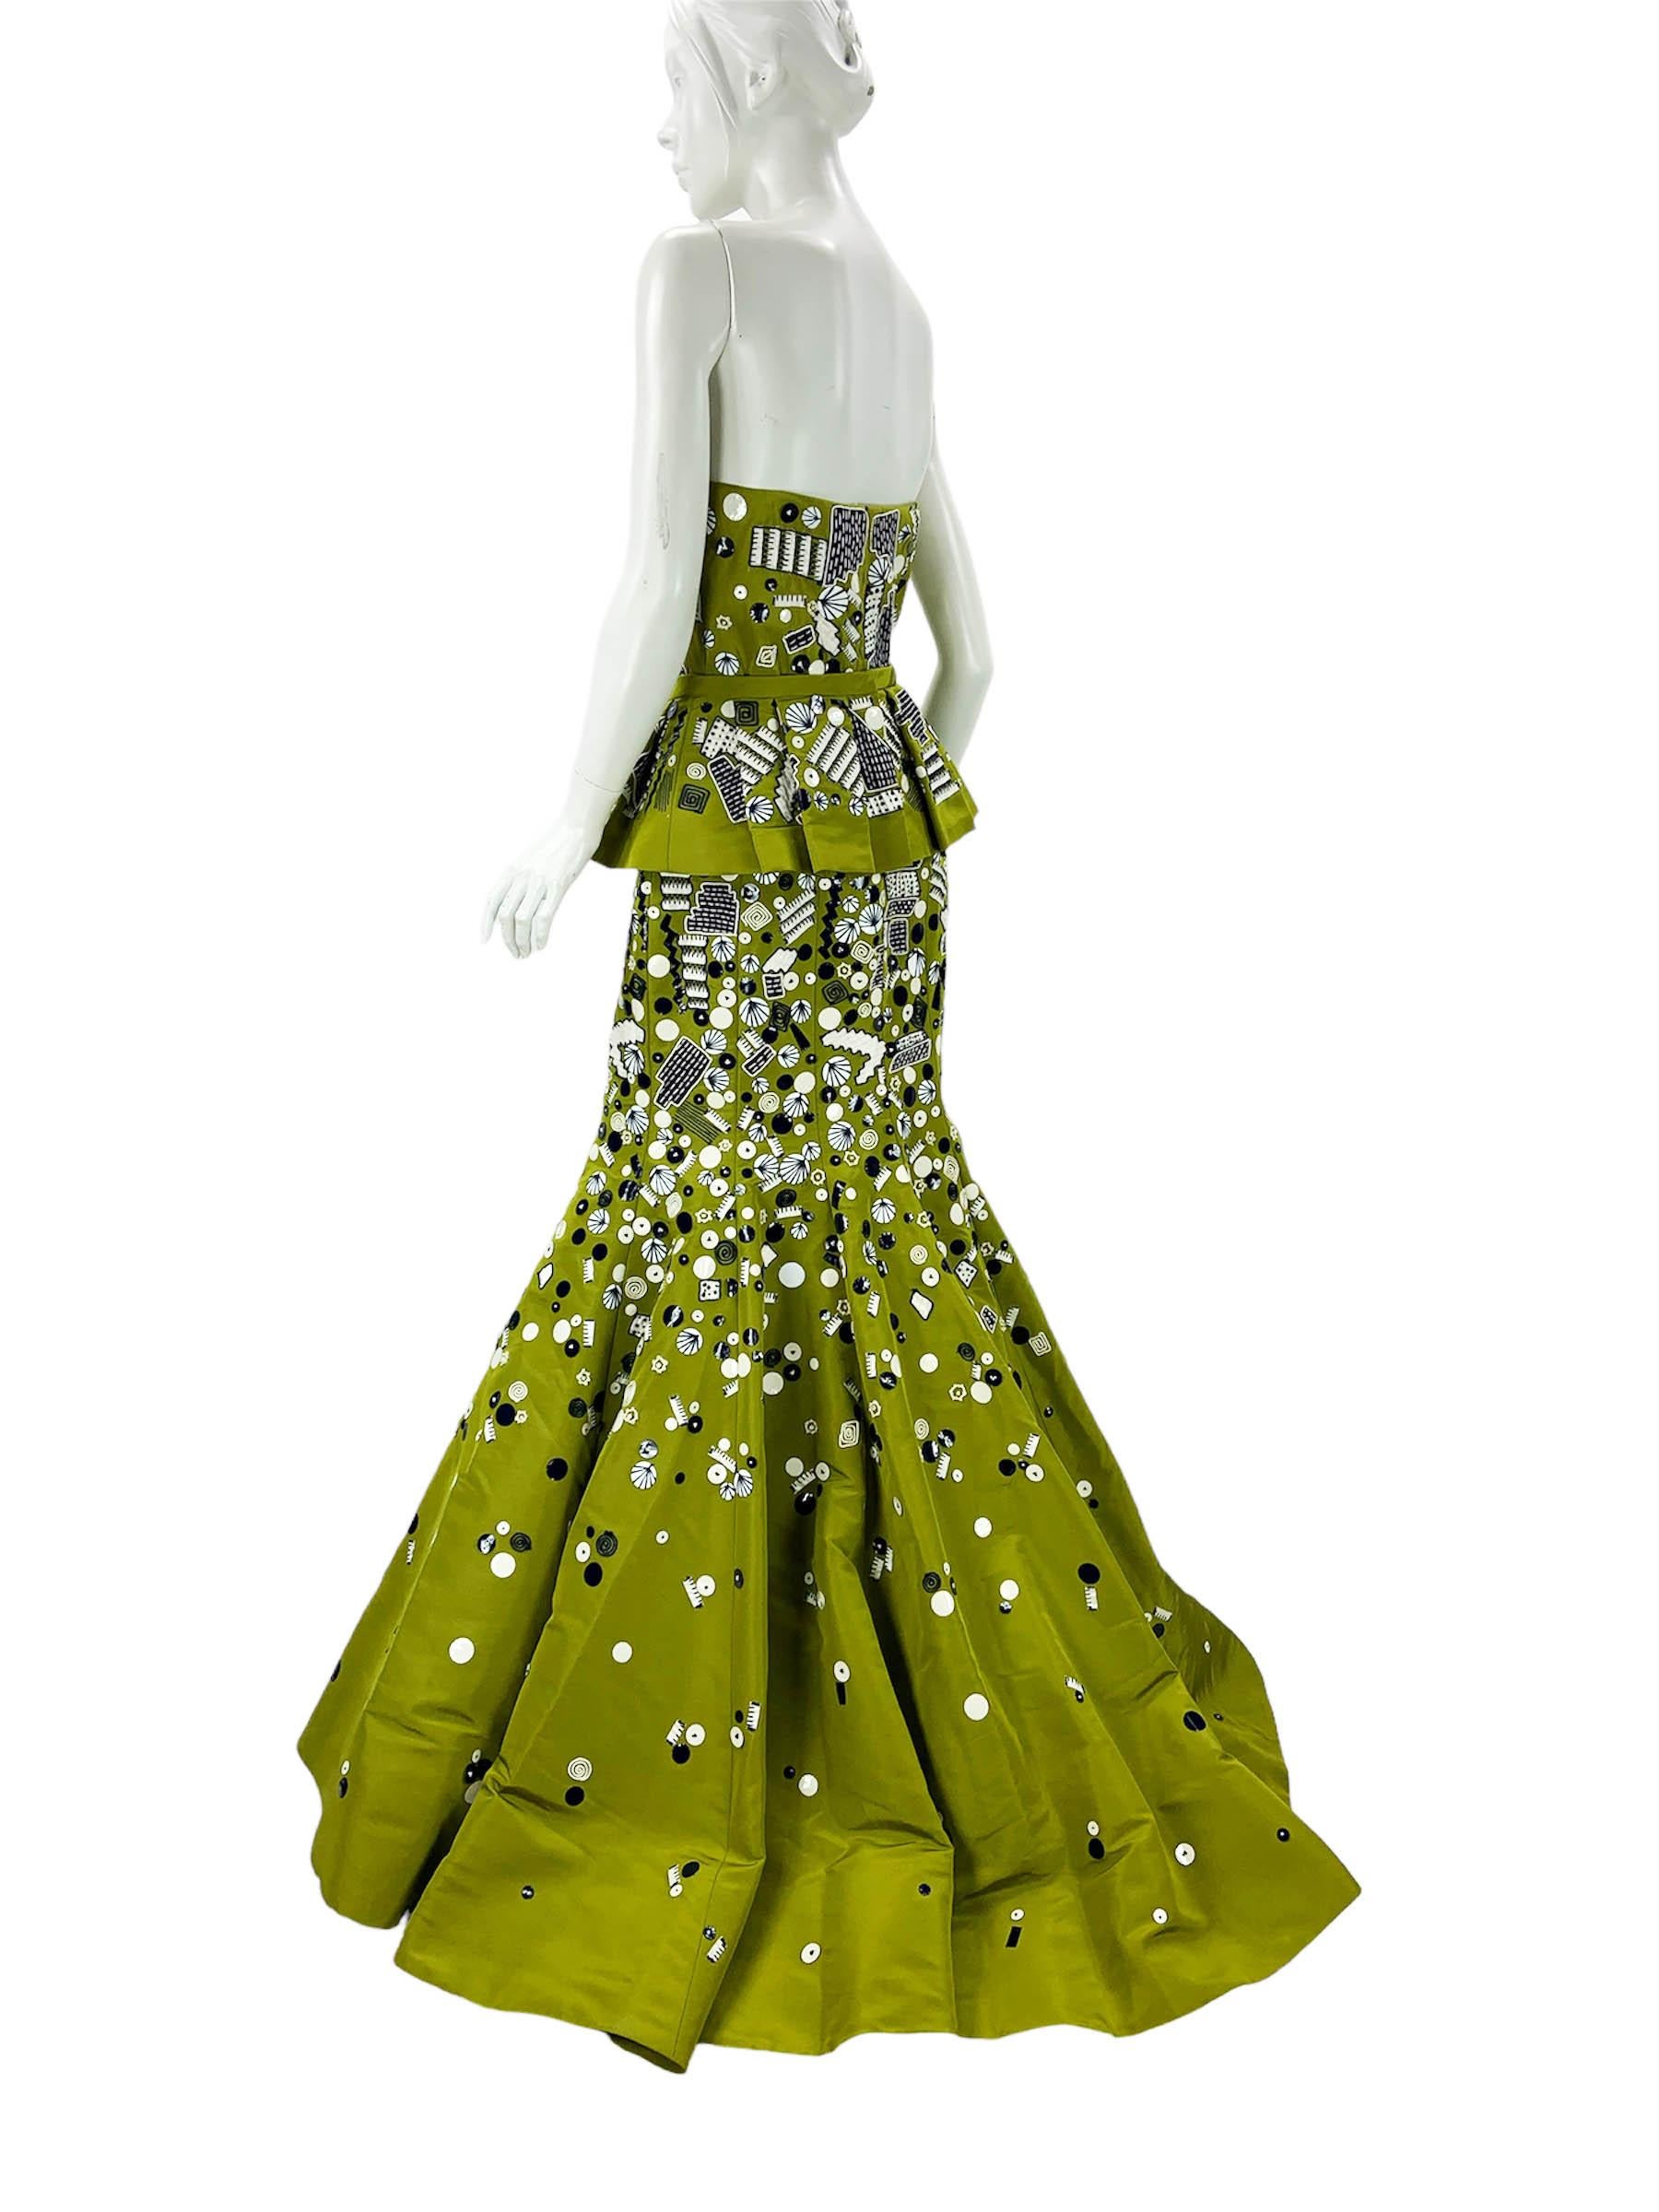 NWT Oscar de la Renta S/S 2009 Green Embellished Silk Taffeta Peplum Dress US 10 In New Condition For Sale In Montgomery, TX